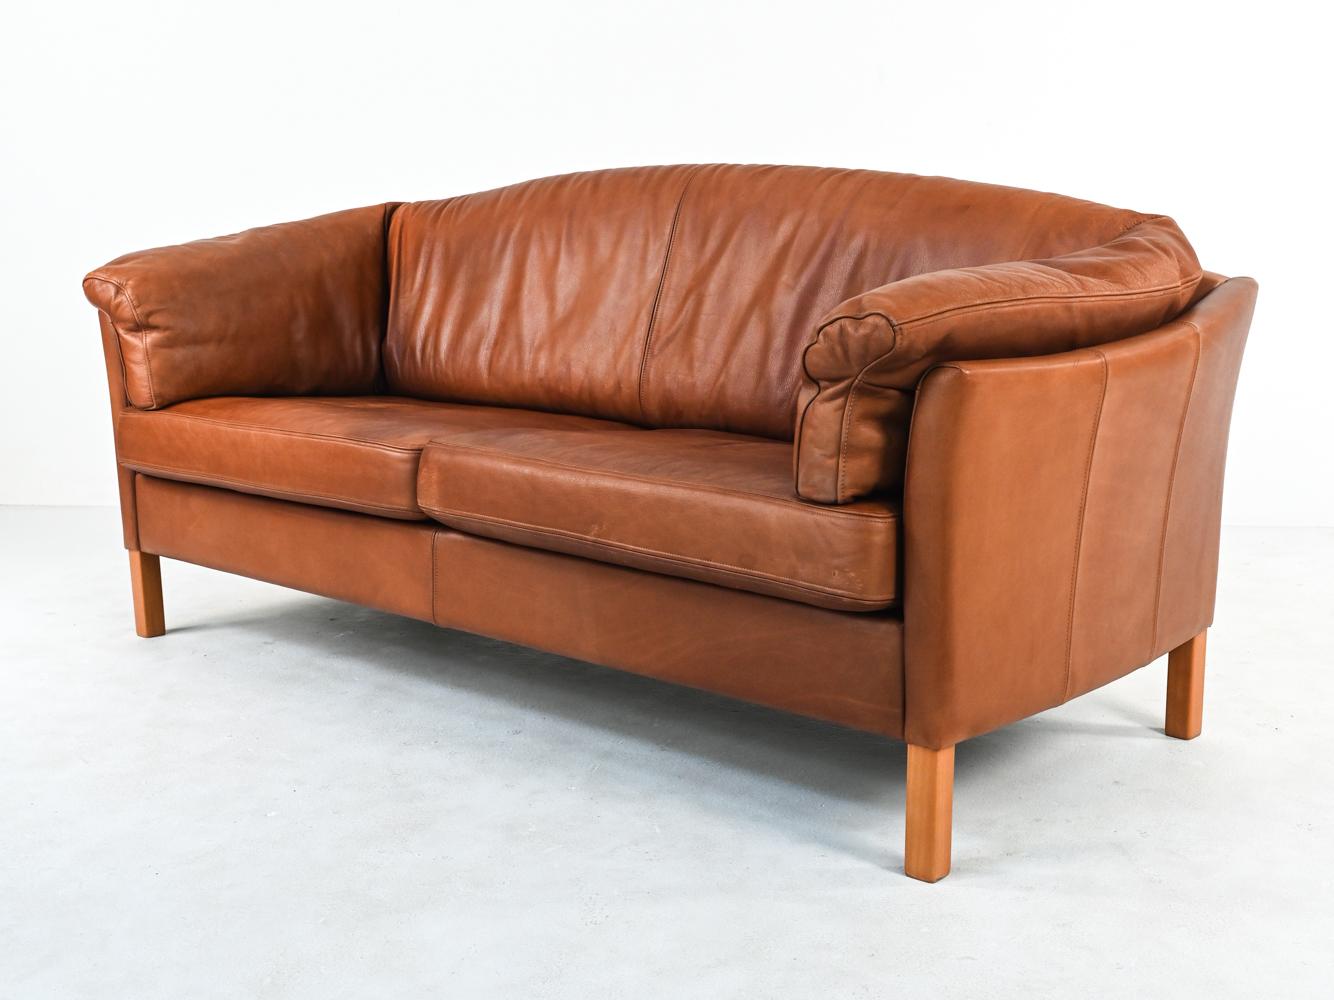 20th Century Danish Model 535 Sofa in Tan Leather by Mogens Hansen, C. 1970's